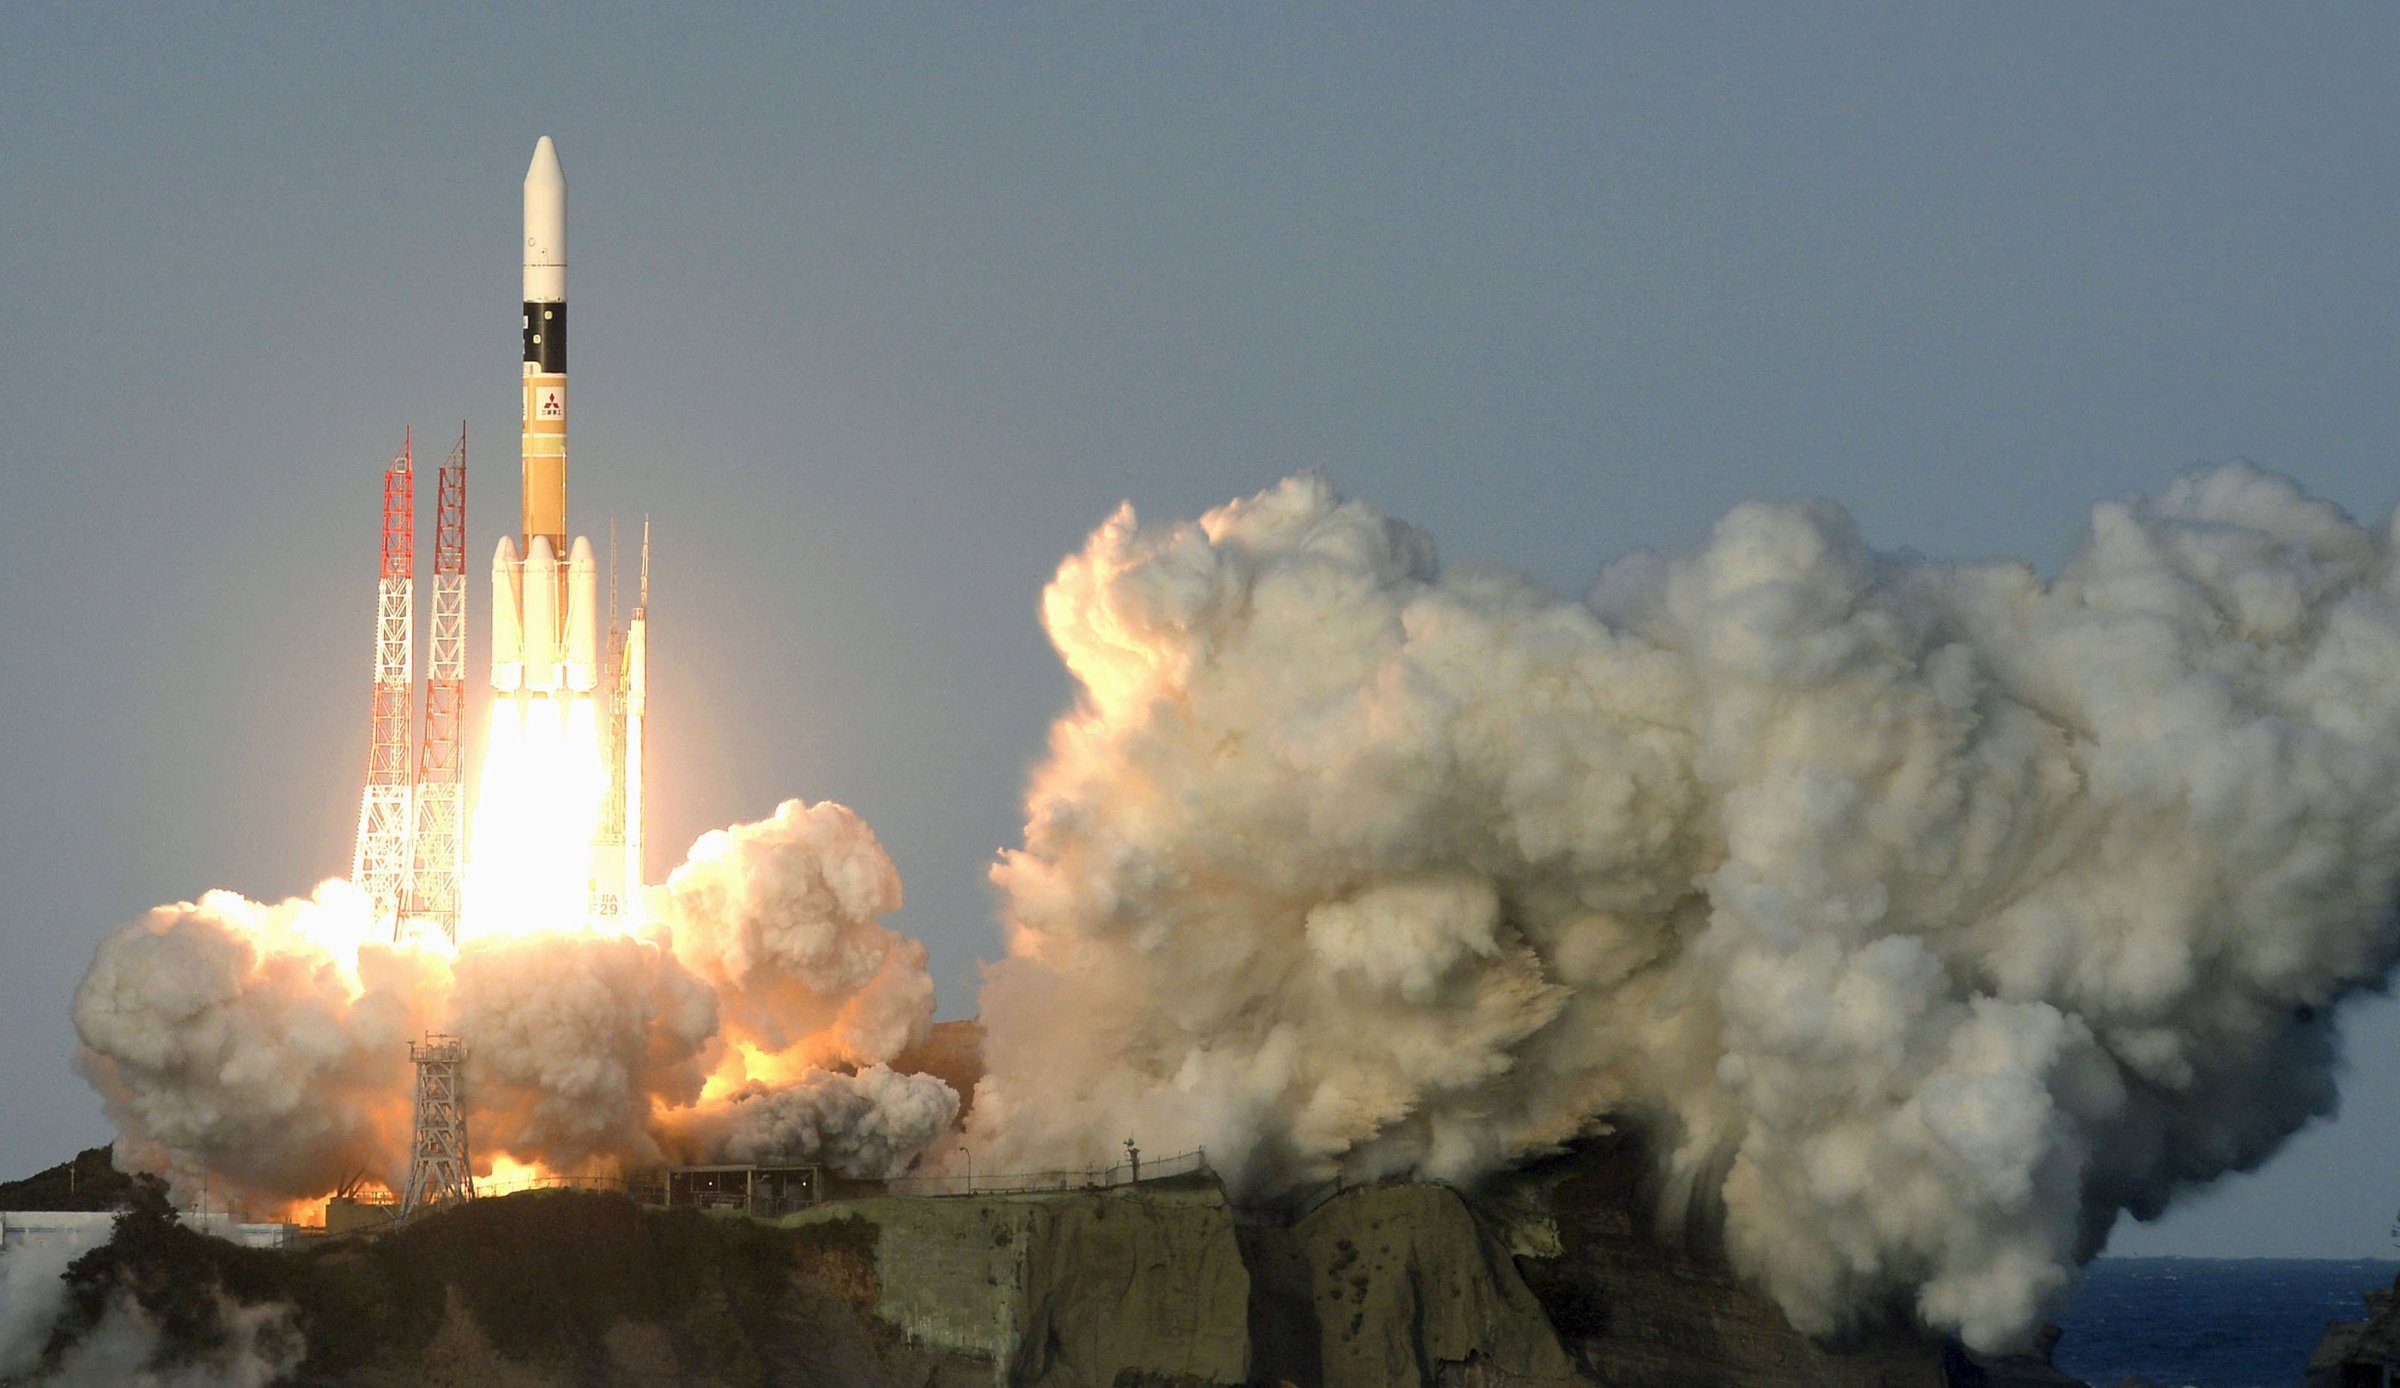 H-IIA rocket, Telesat's broadcast and telecommunication satellite, lifts off from the launching pad at Tanegashima Space Center on the Japanese southwestern island of Tanegashima